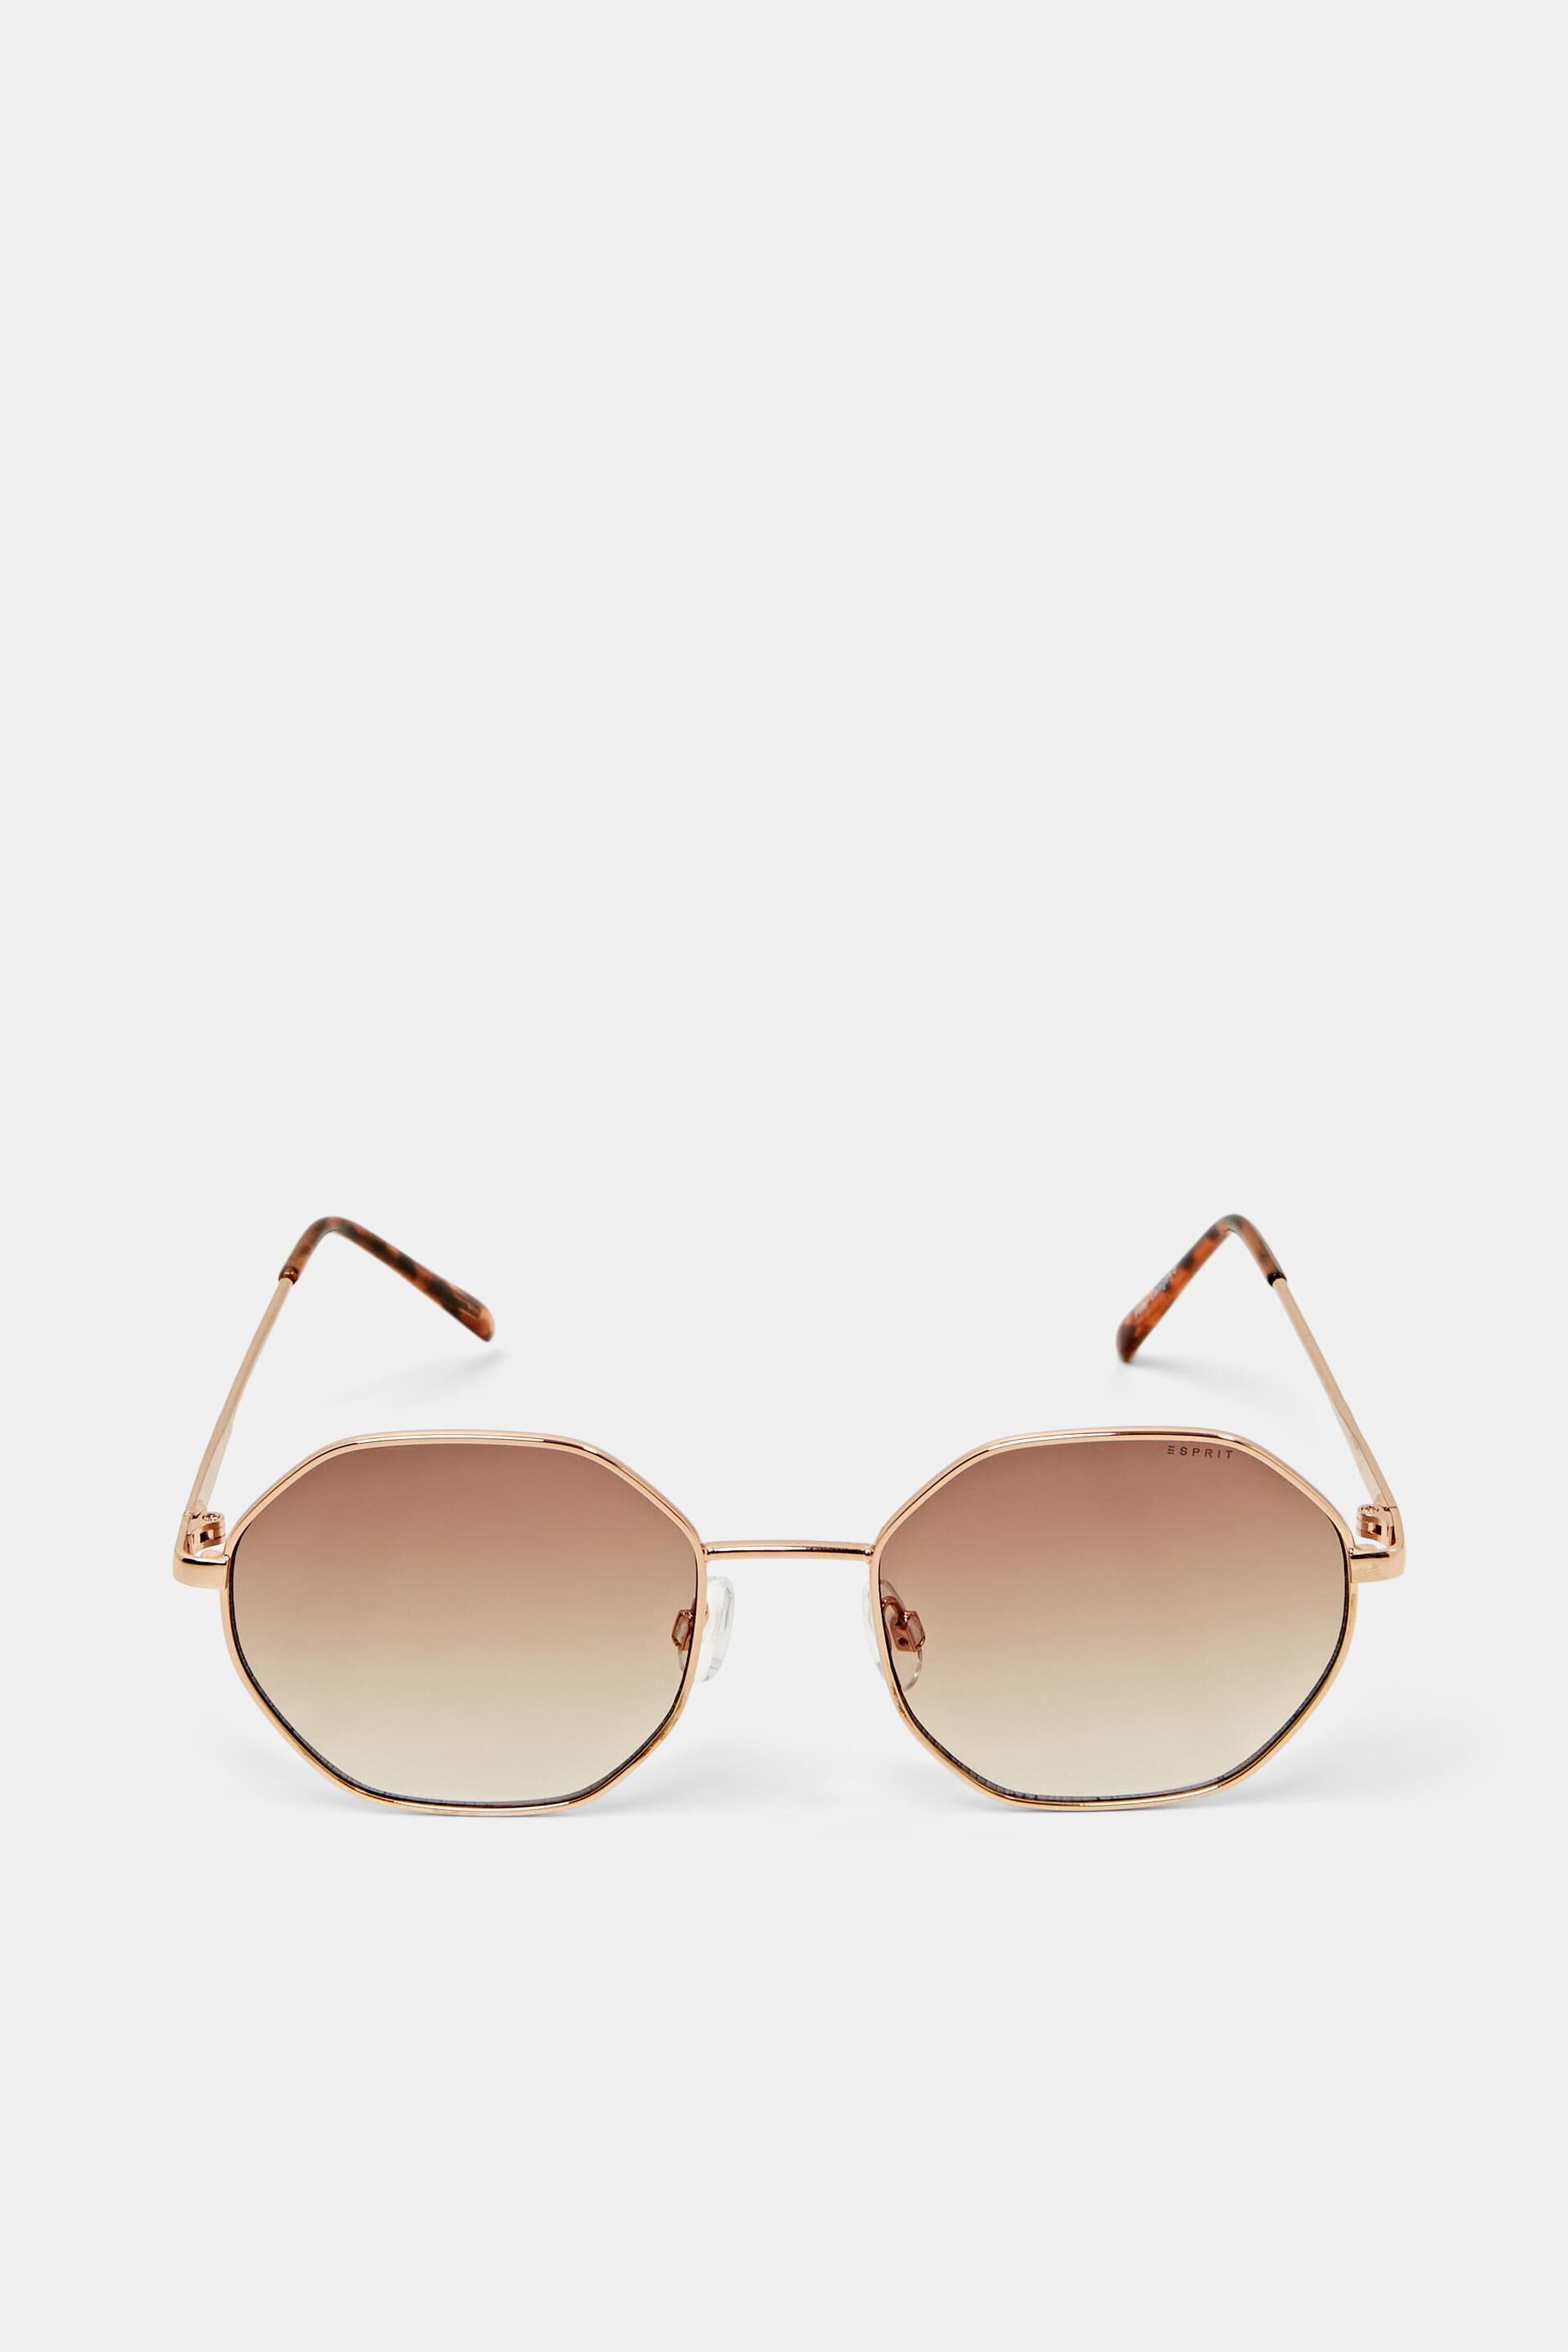 Esprit frame gold filigree Sunglasses metal with